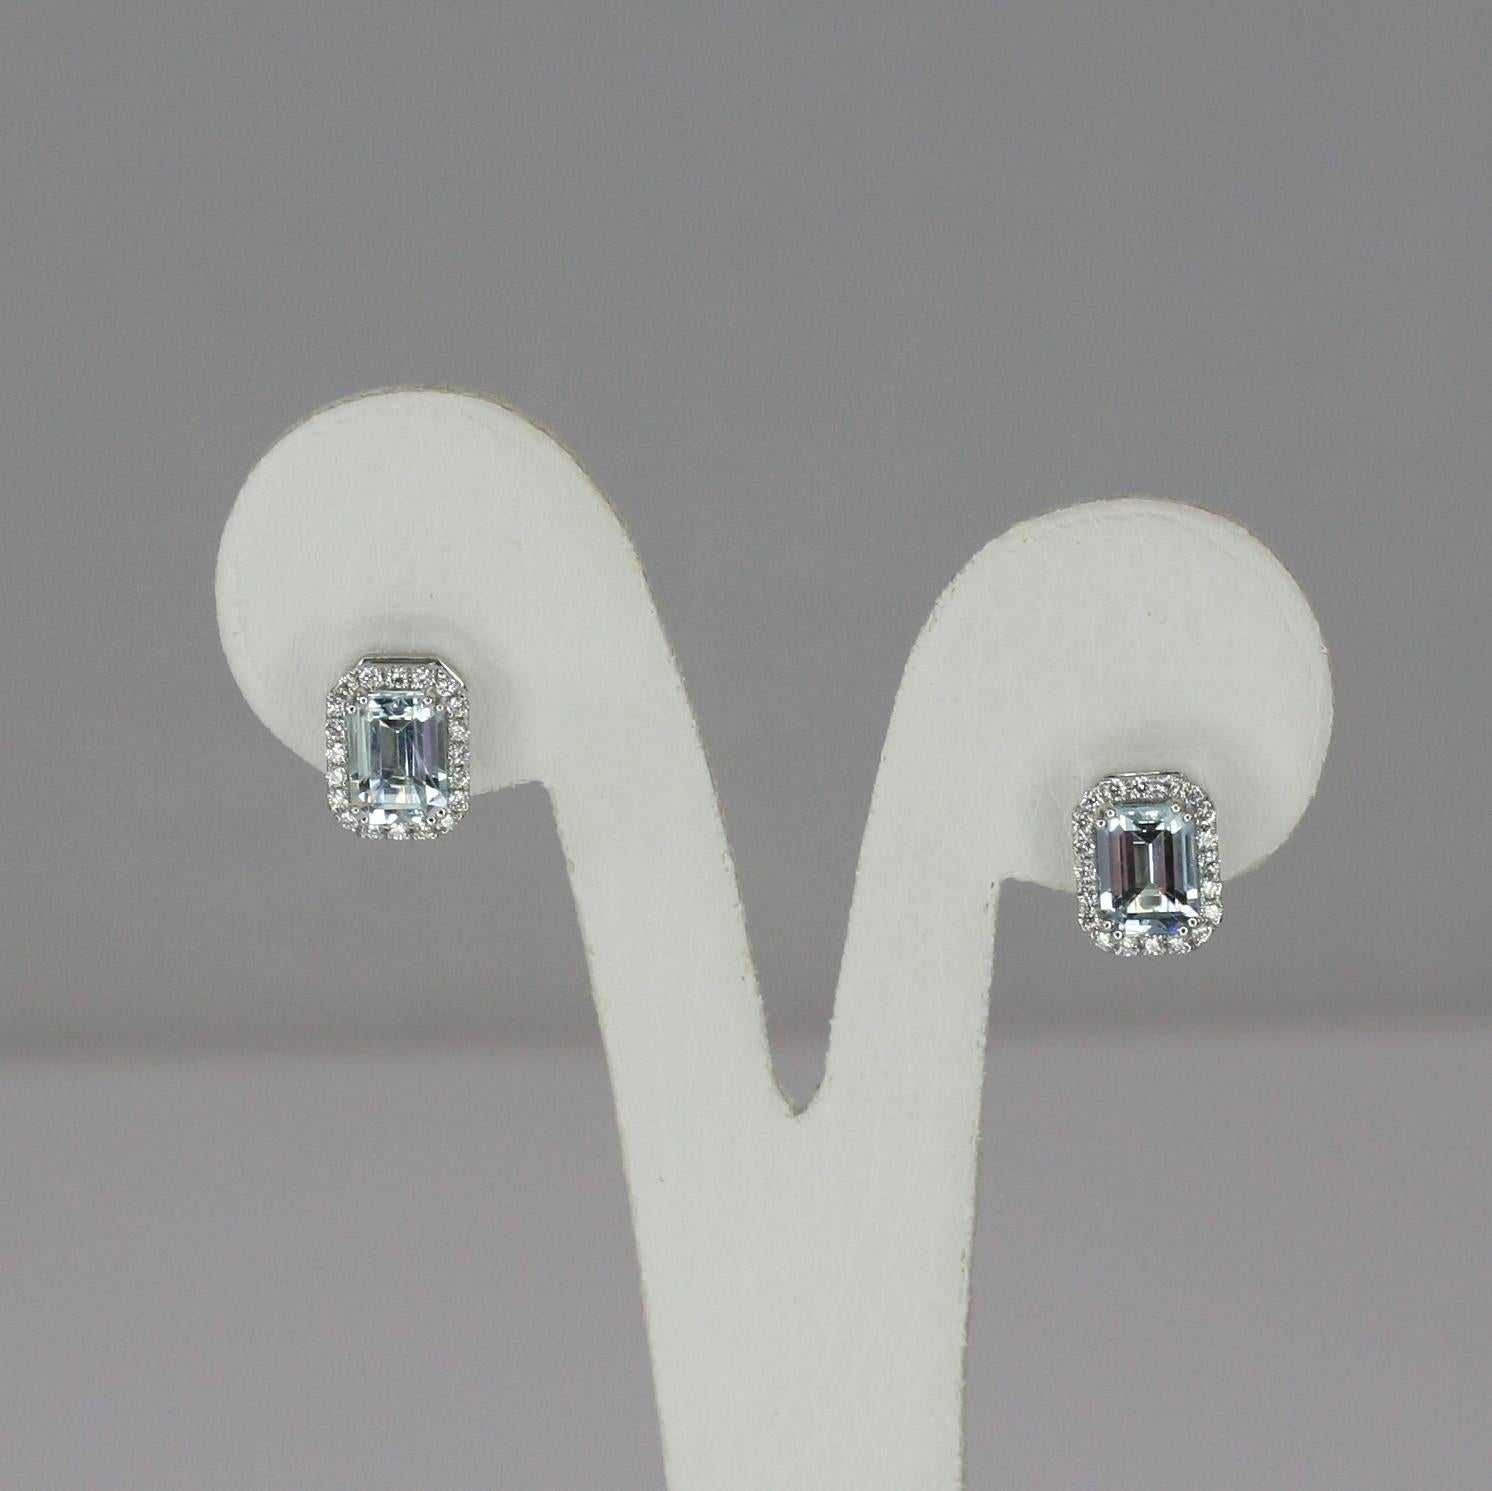 aquamarine earrings costco